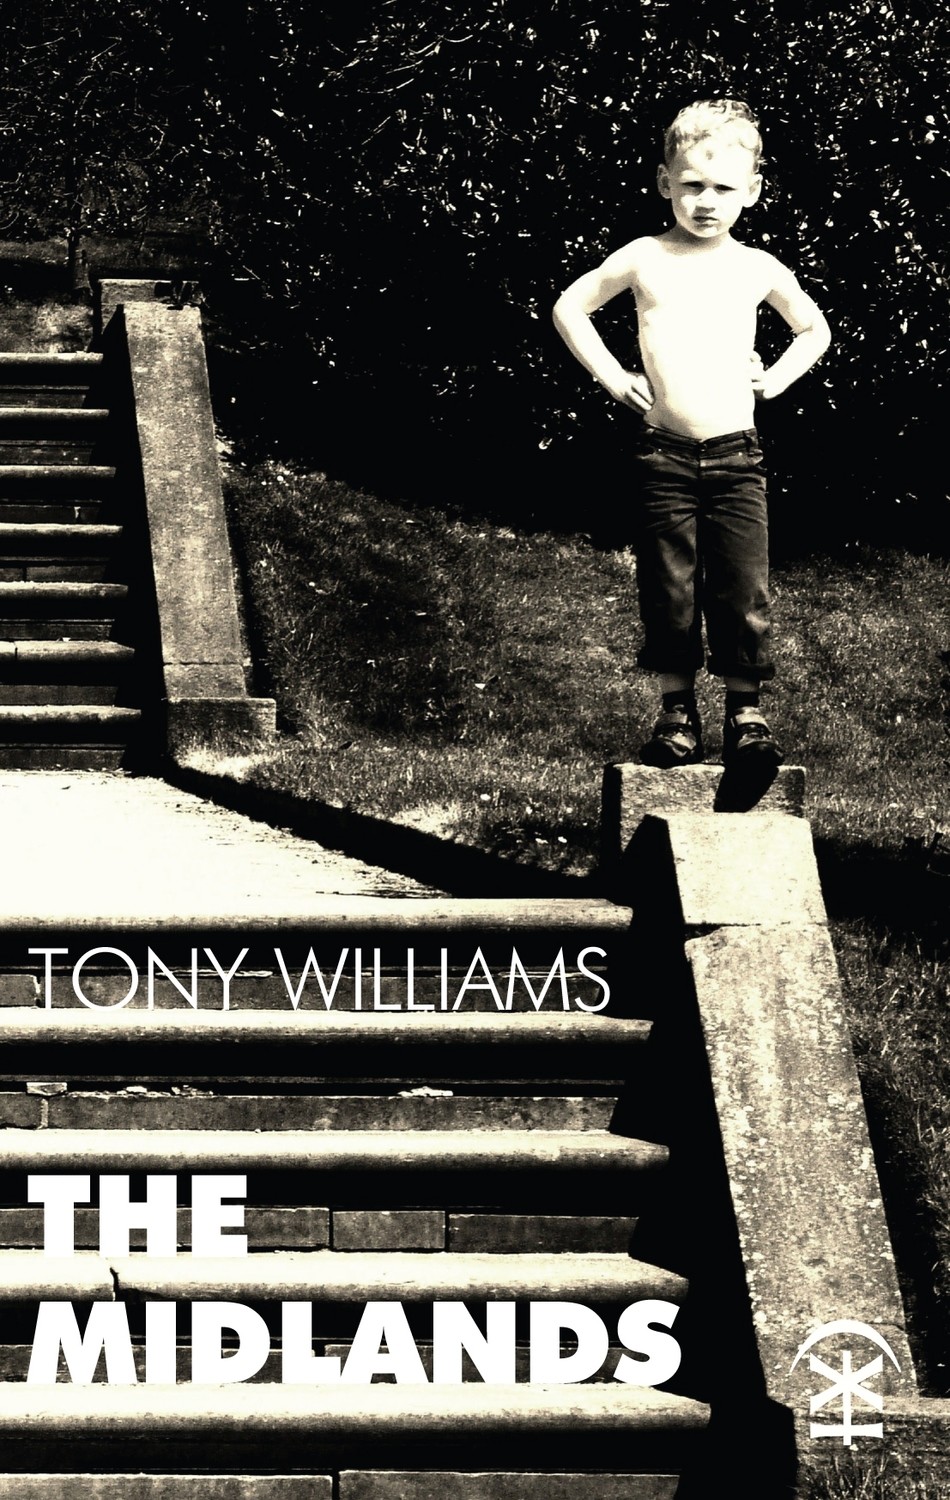 The Midlands - Tony Williams